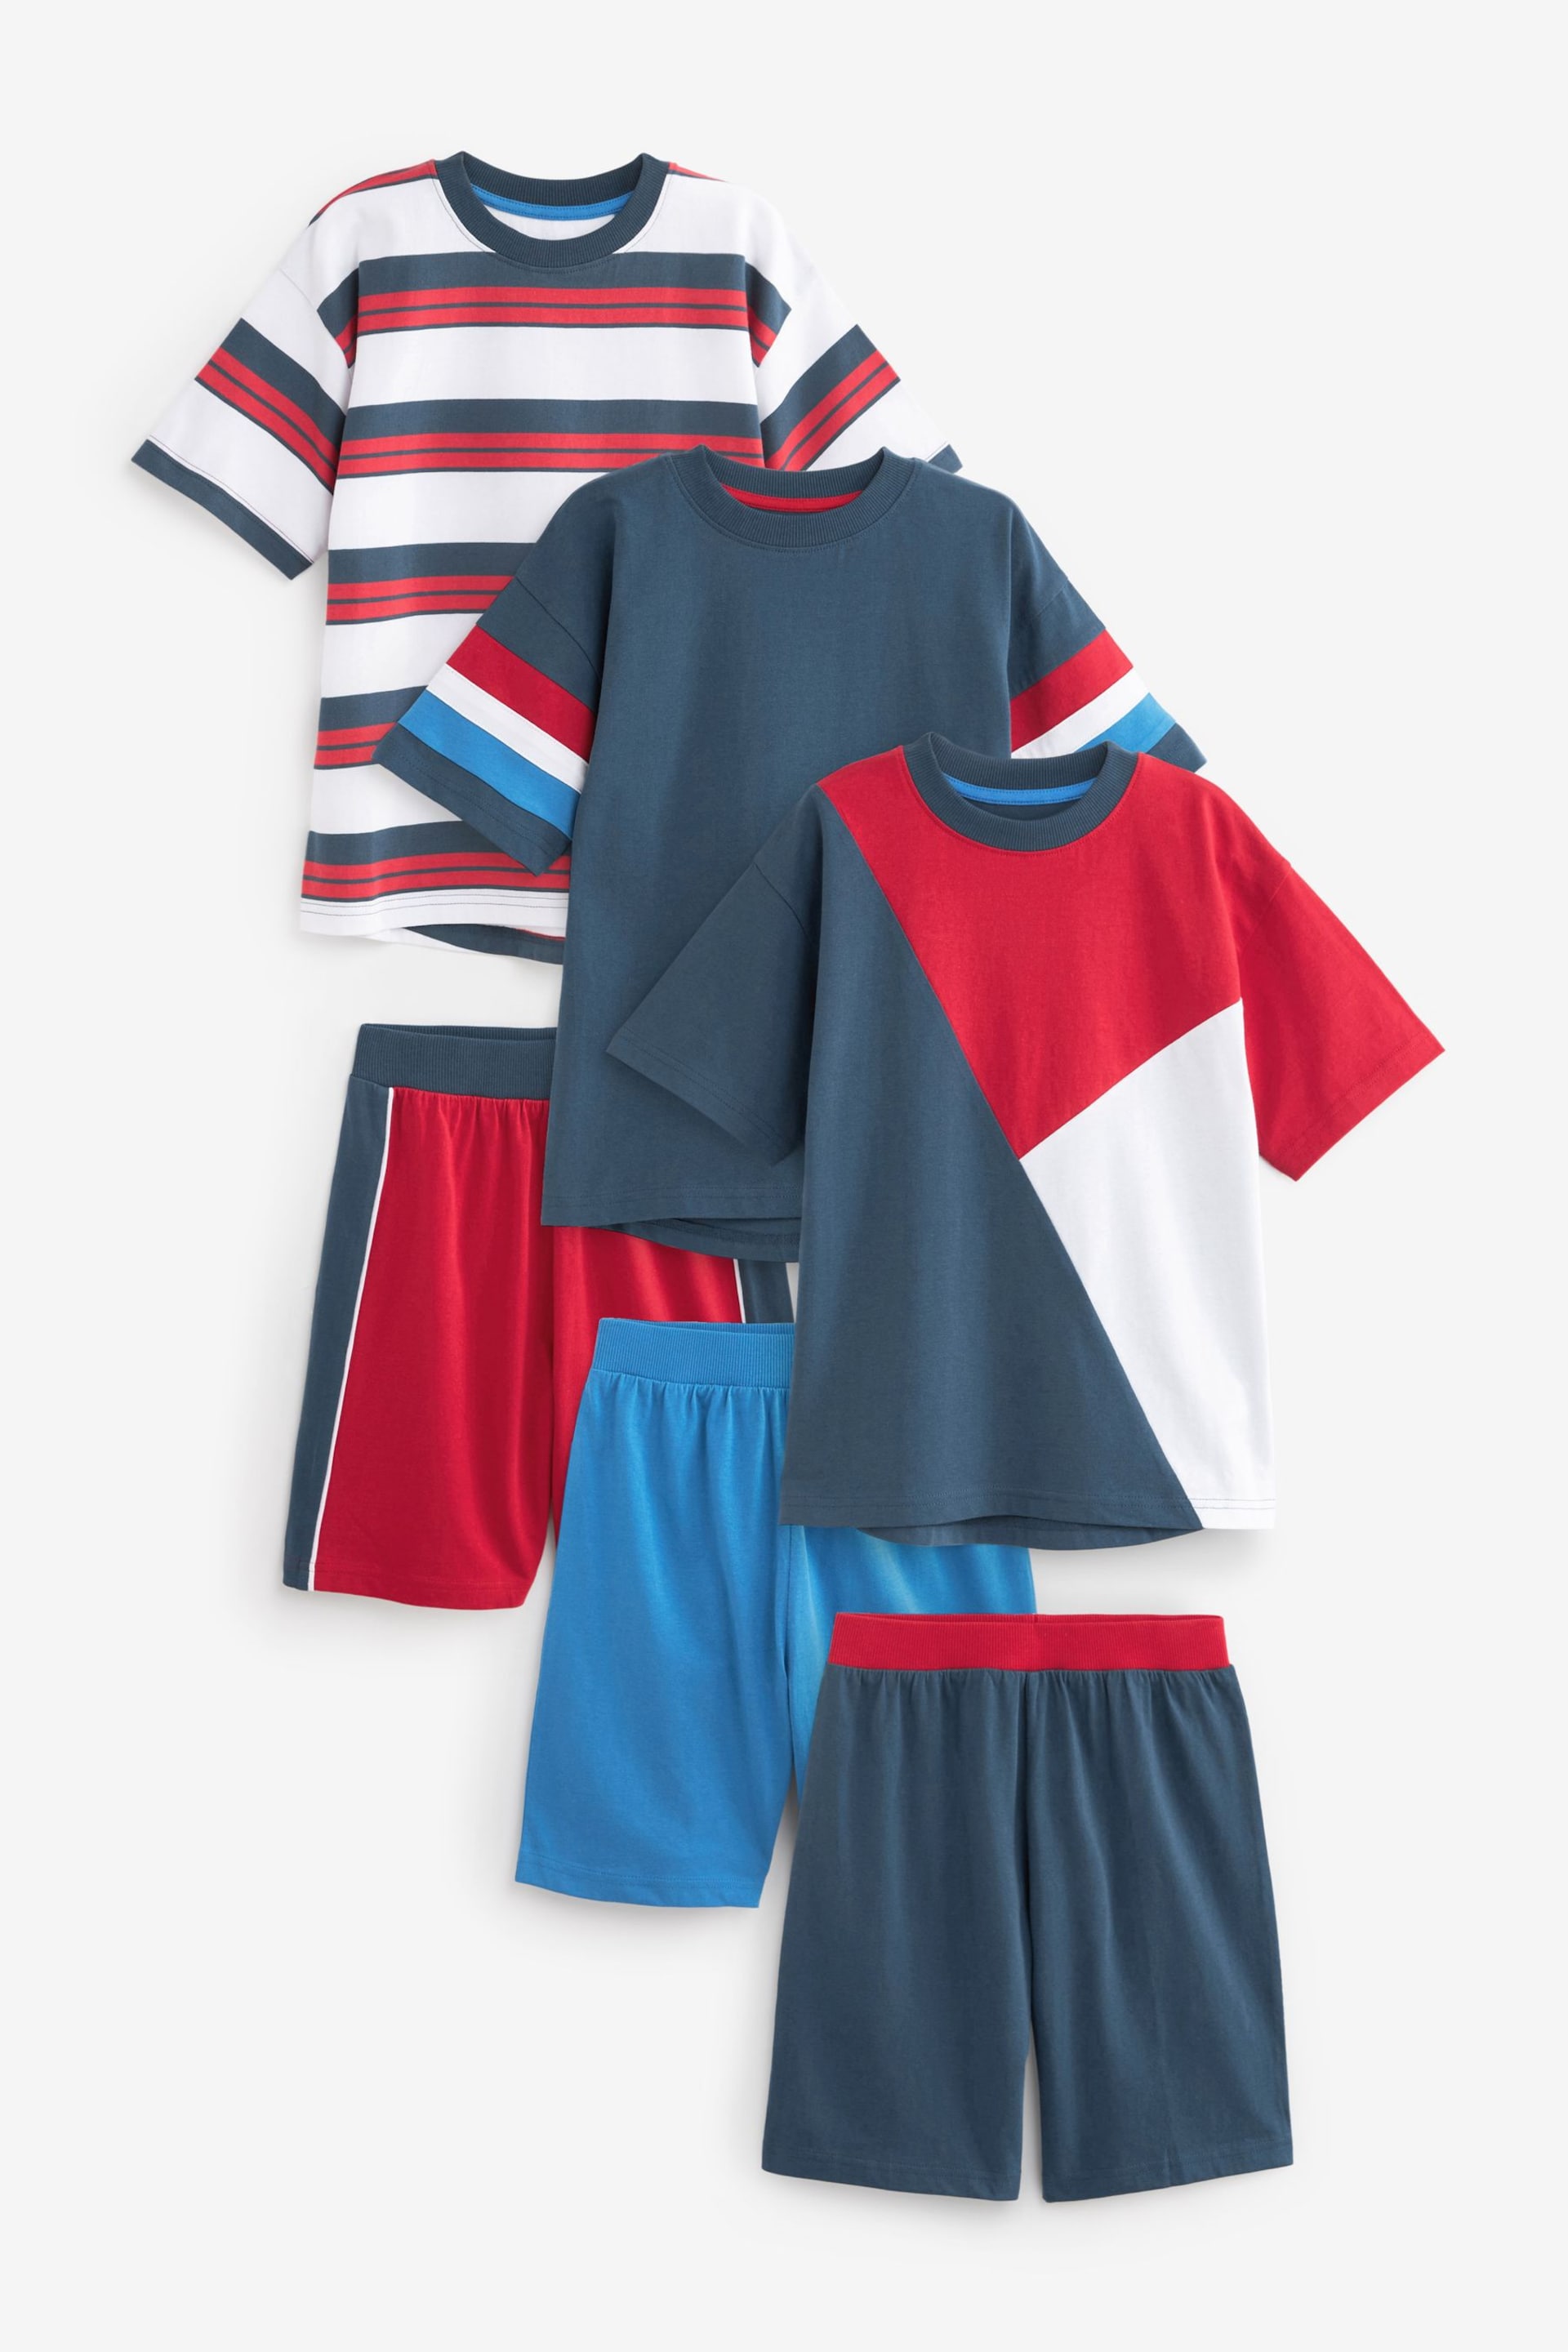 Red/Blue/White Short Pyjamas 3 Pack (1.5-16yrs) - Image 1 of 6